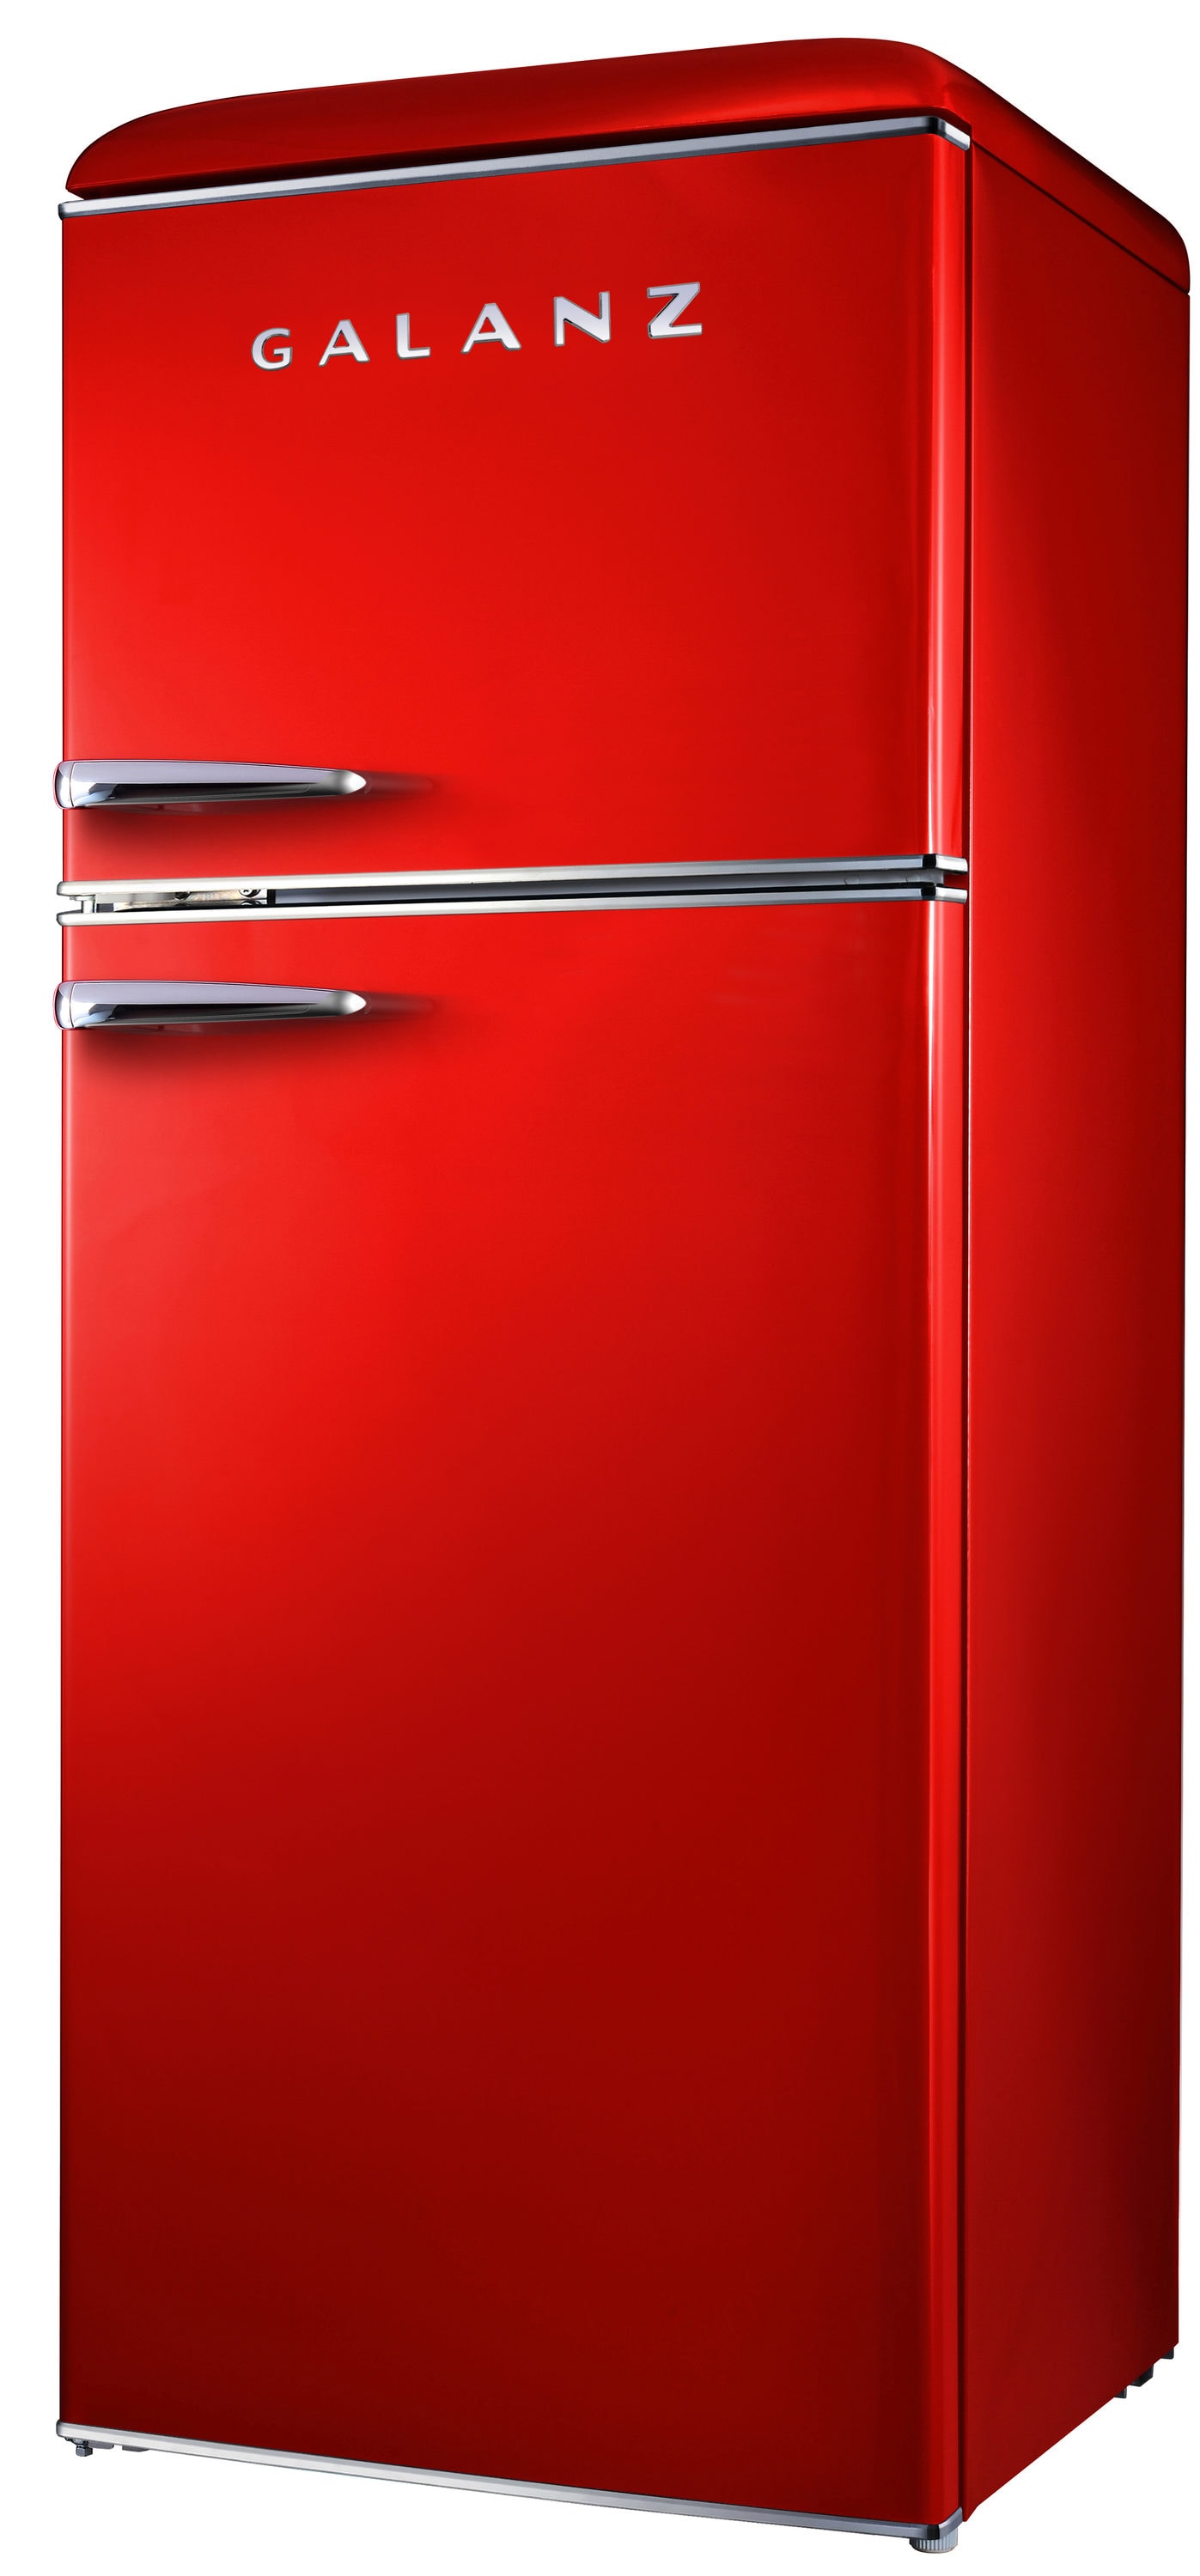 galanz refrigerator for Sale in Dallas, TX - OfferUp